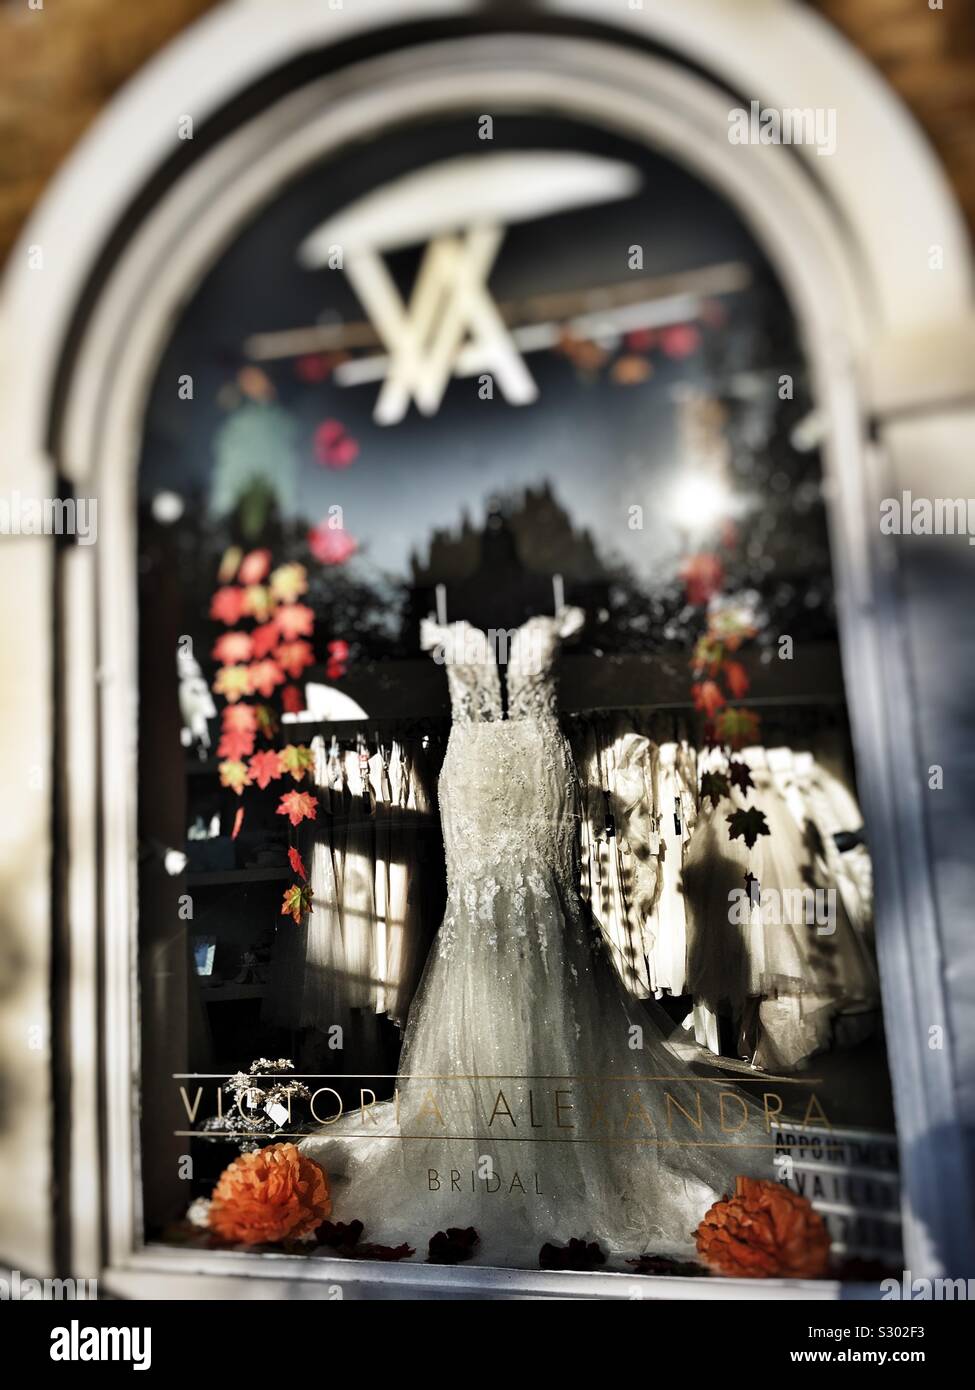 Victoria Alexander bridal wear shop Stock Photo